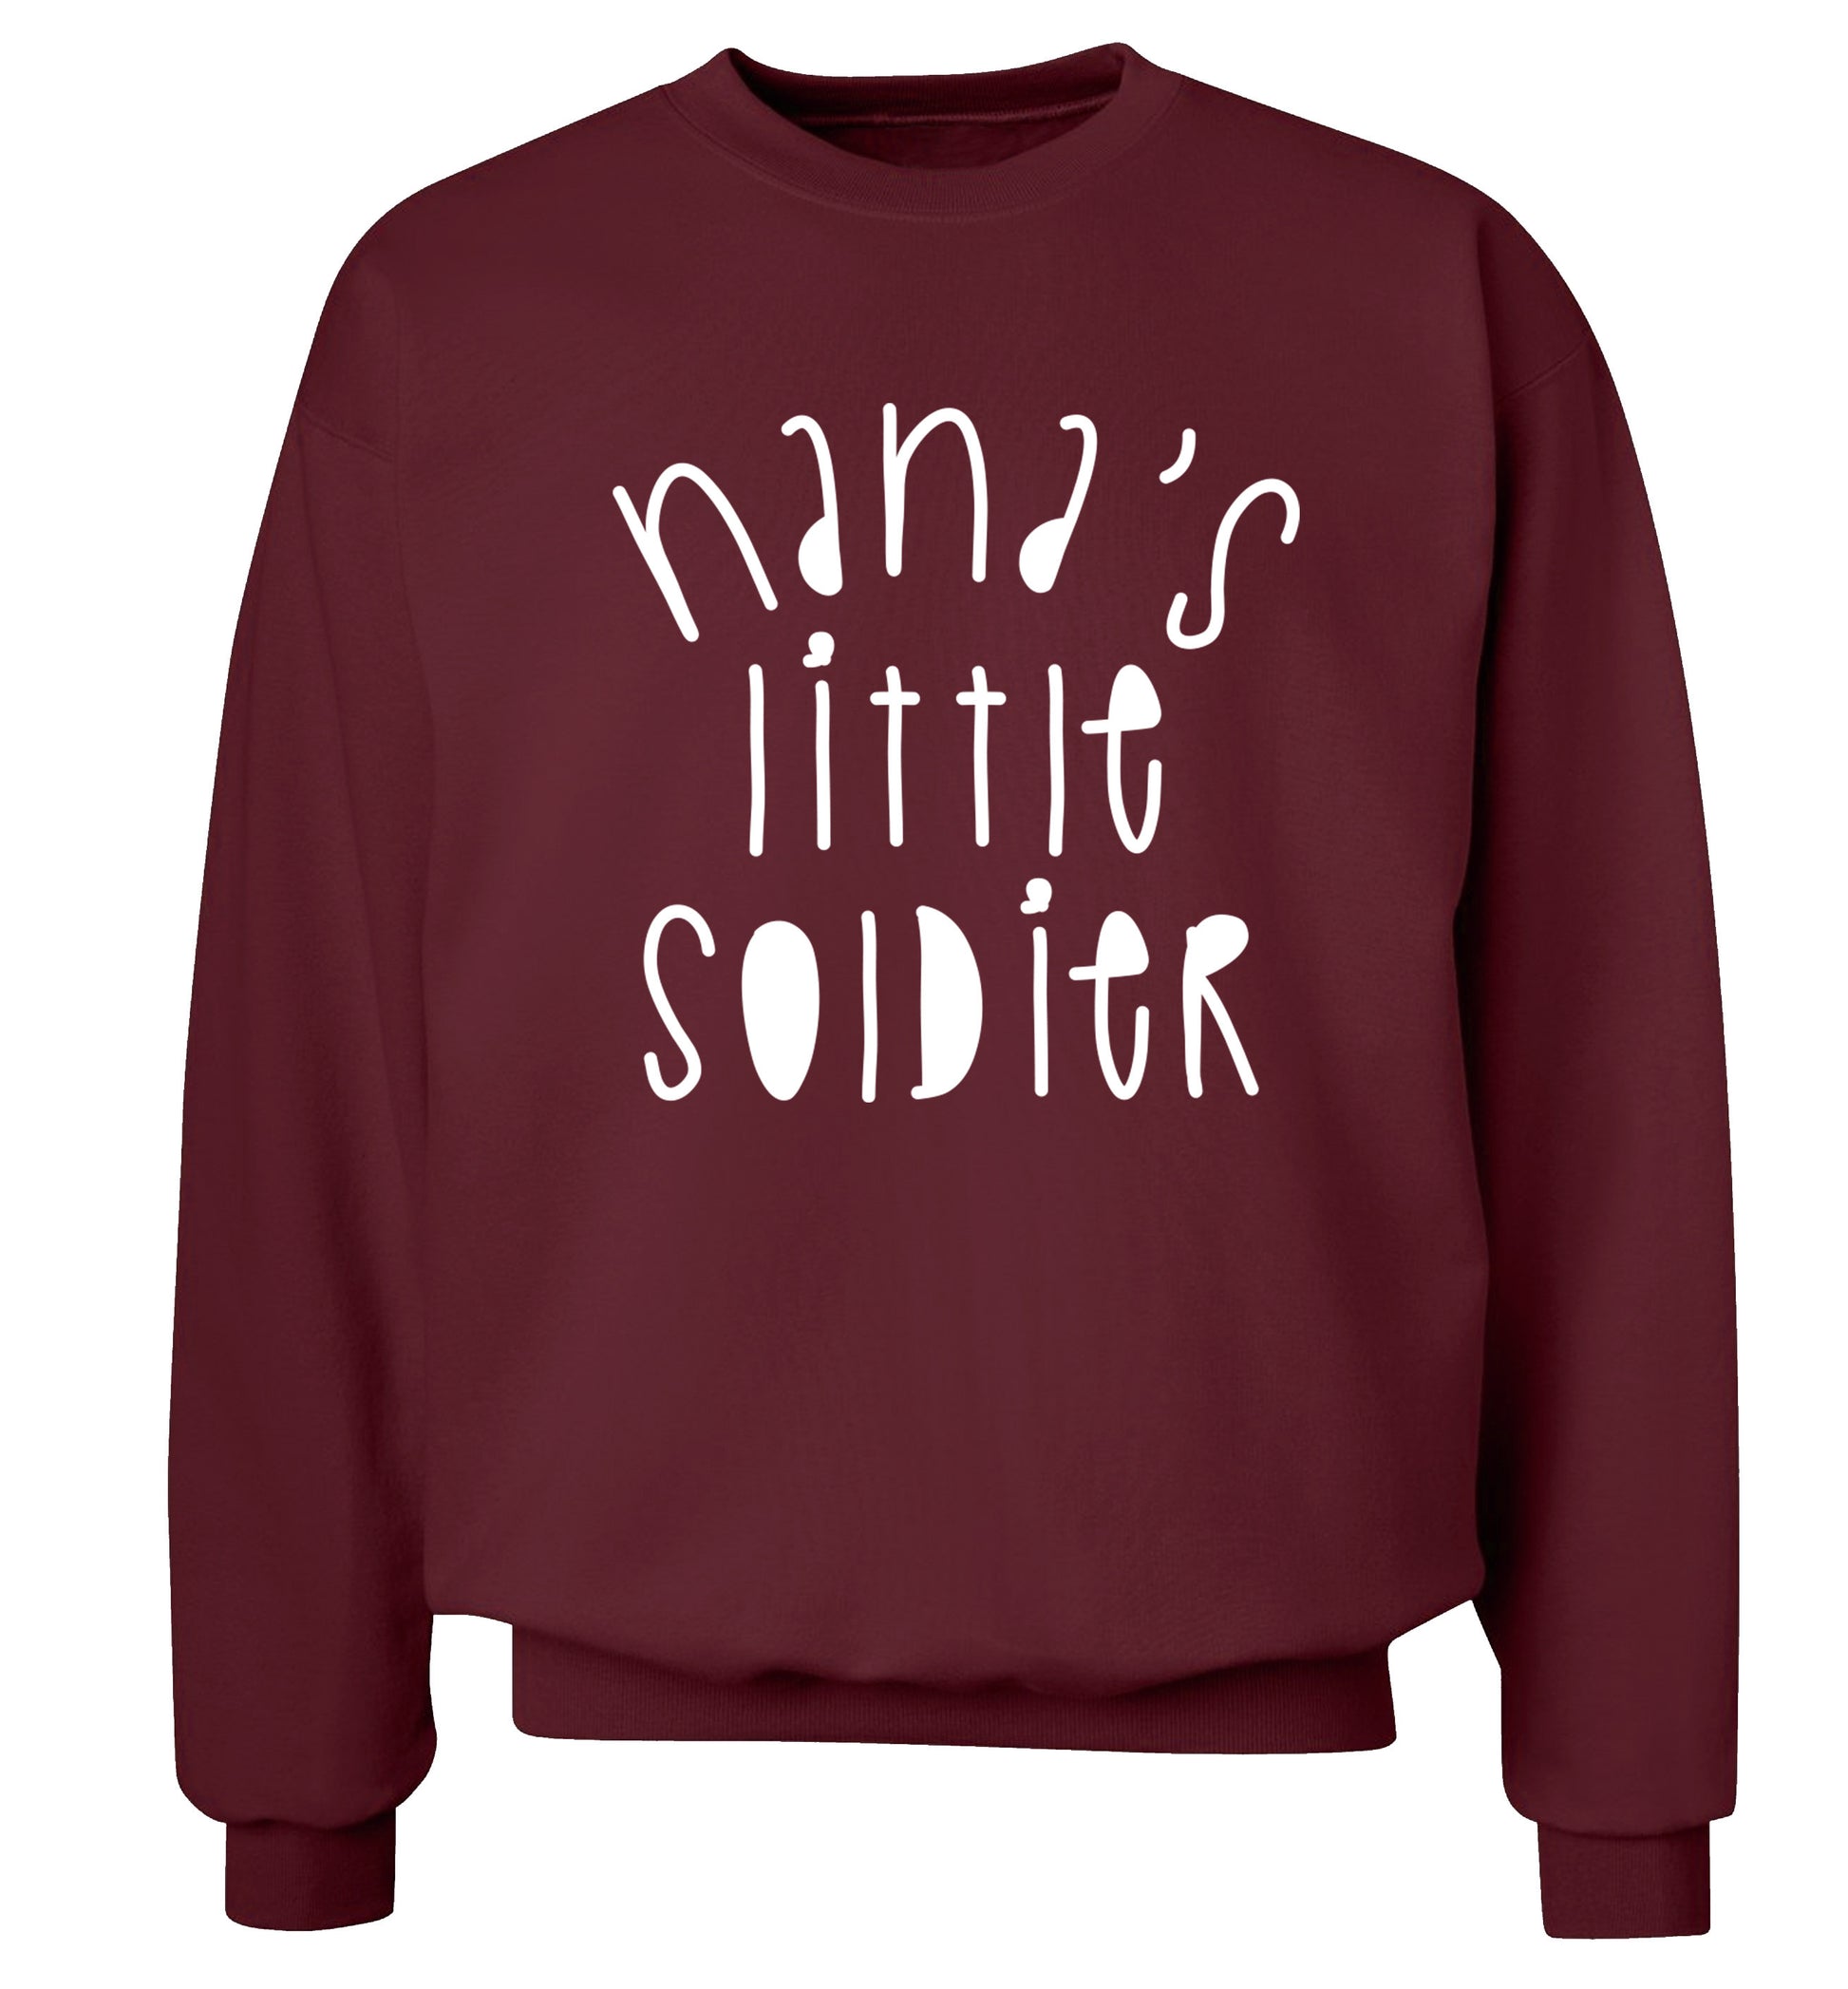 Nana's little soldier Adult's unisex maroon Sweater 2XL